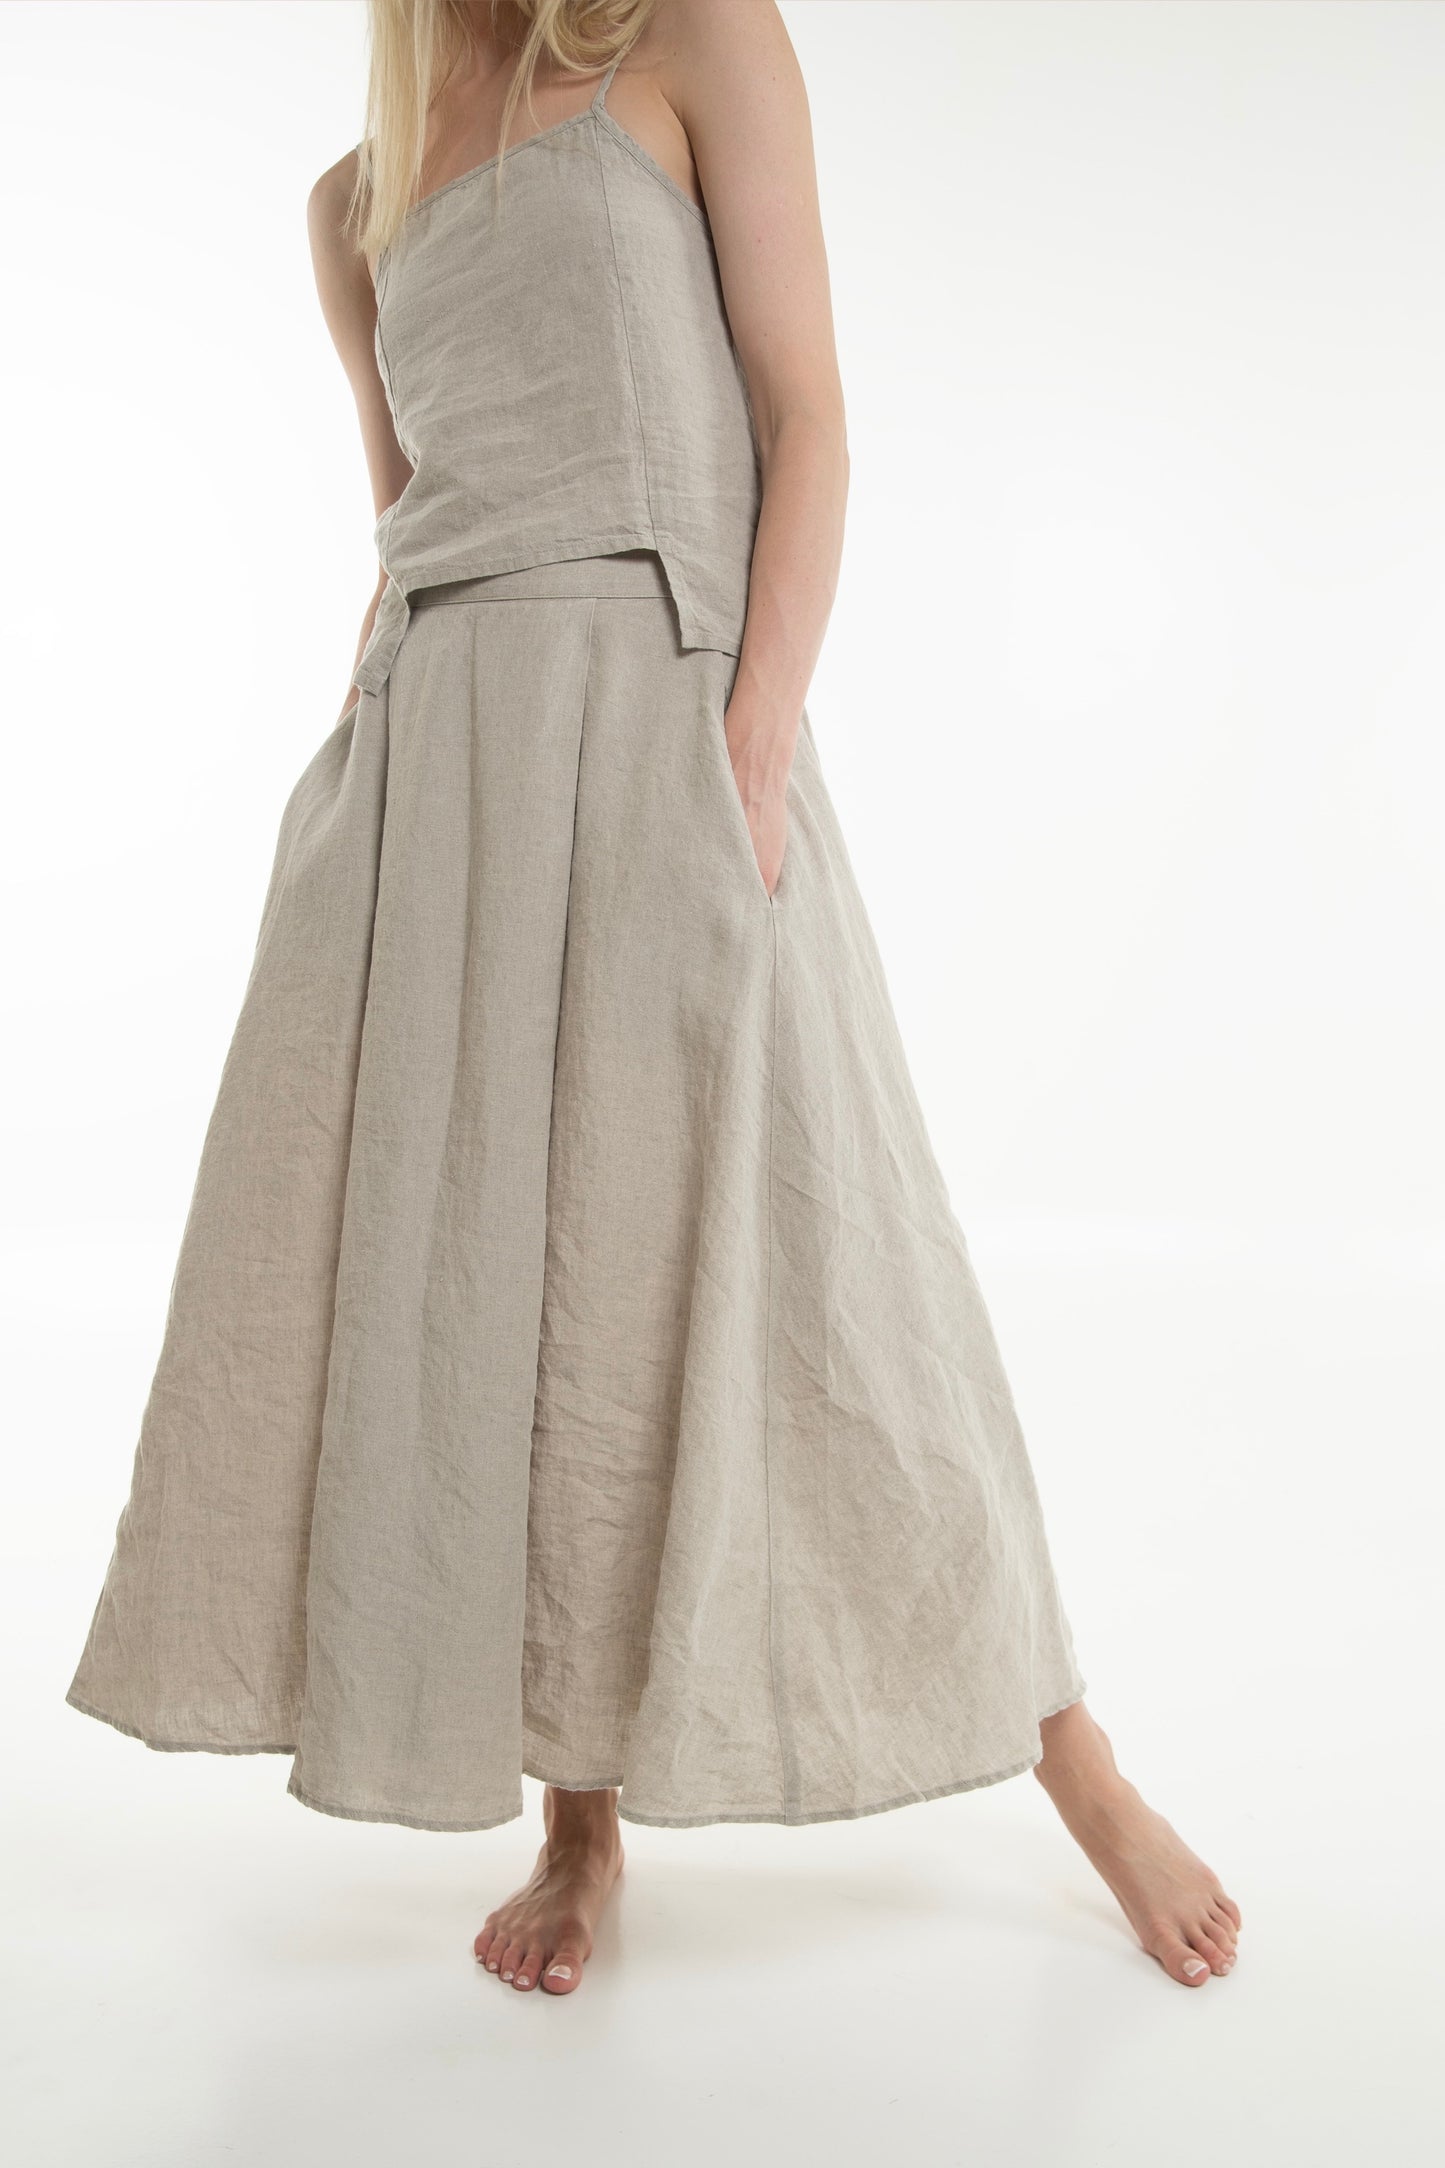 Atsui Woman Skirt Natural - Unisex